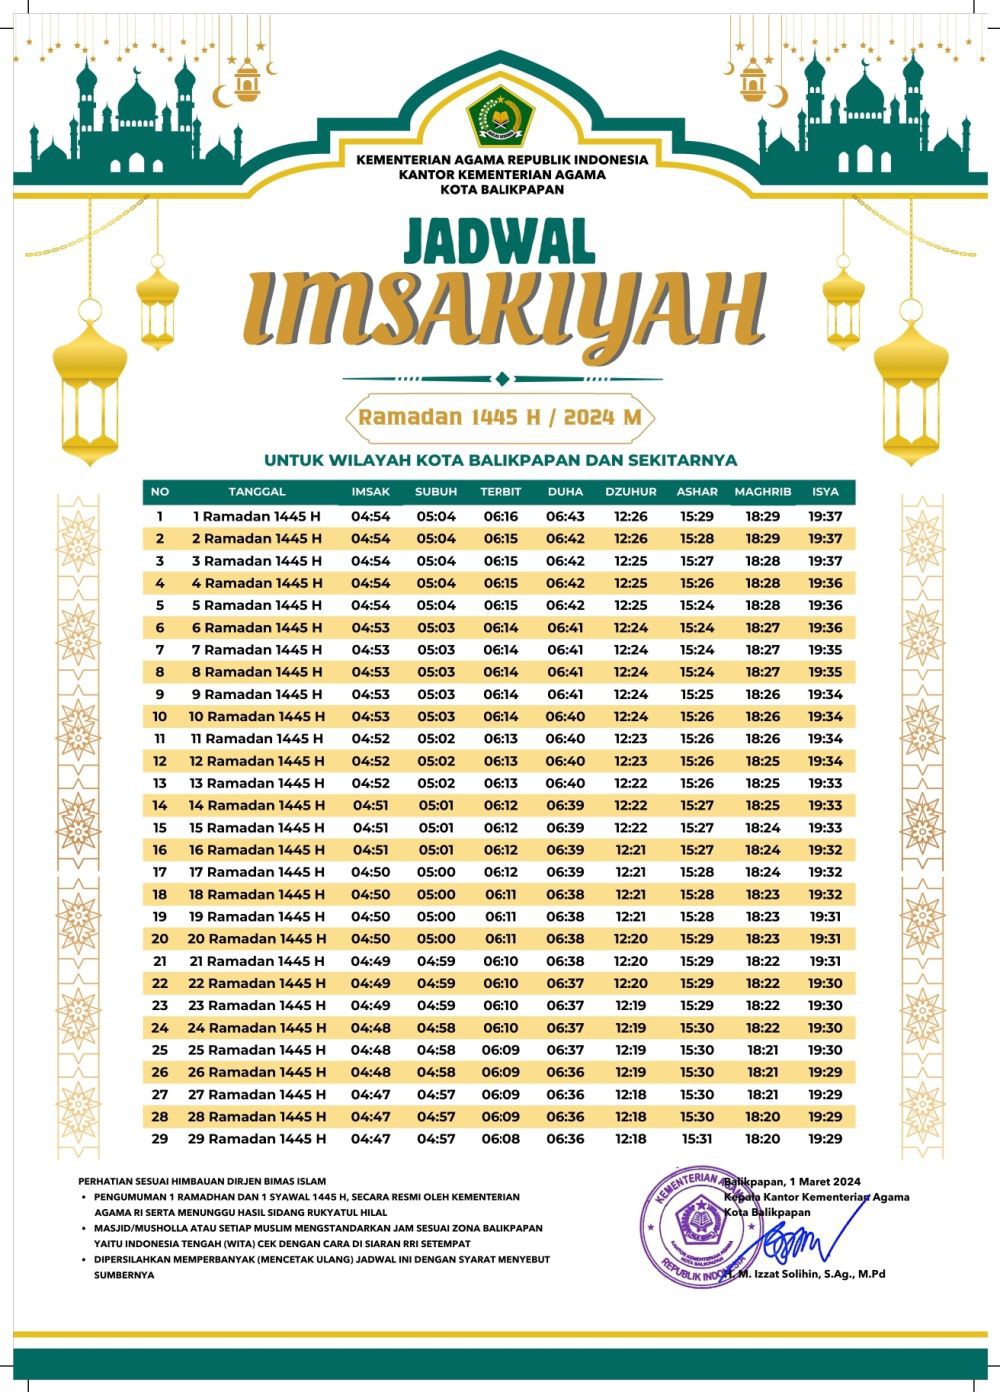 Jadwal Imsakiyah Ramadan 1445 H untuk Balikpapan dan Sekitarnya